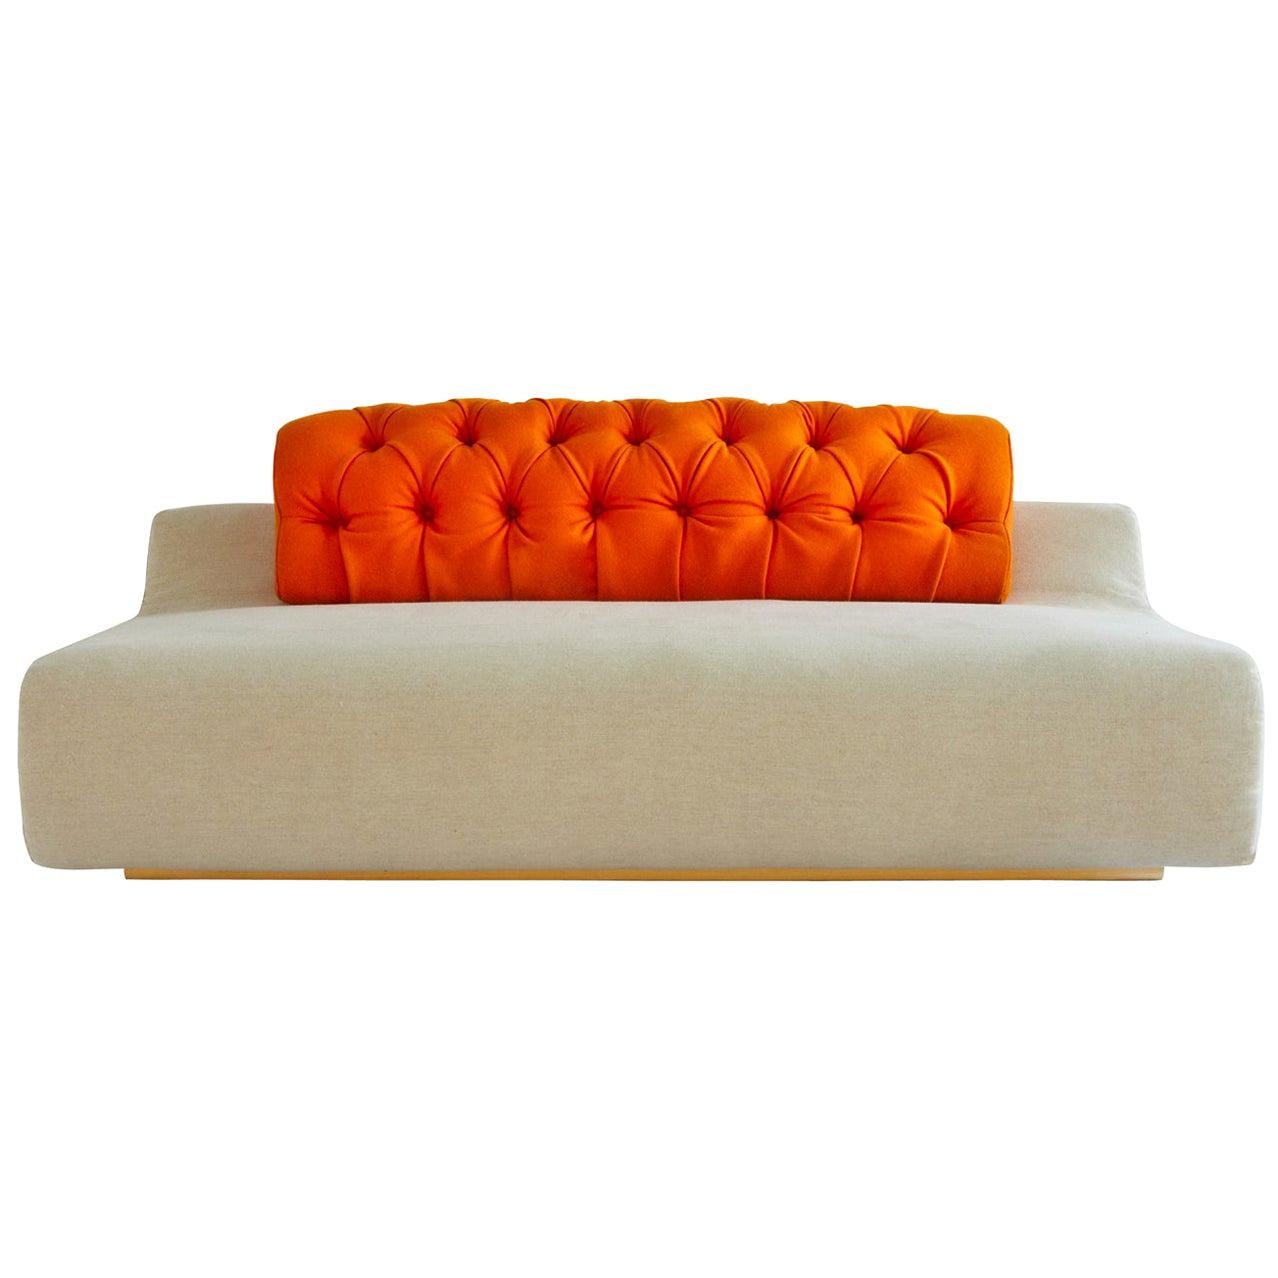 Baco Ivory Sofa by Sara Ferrari